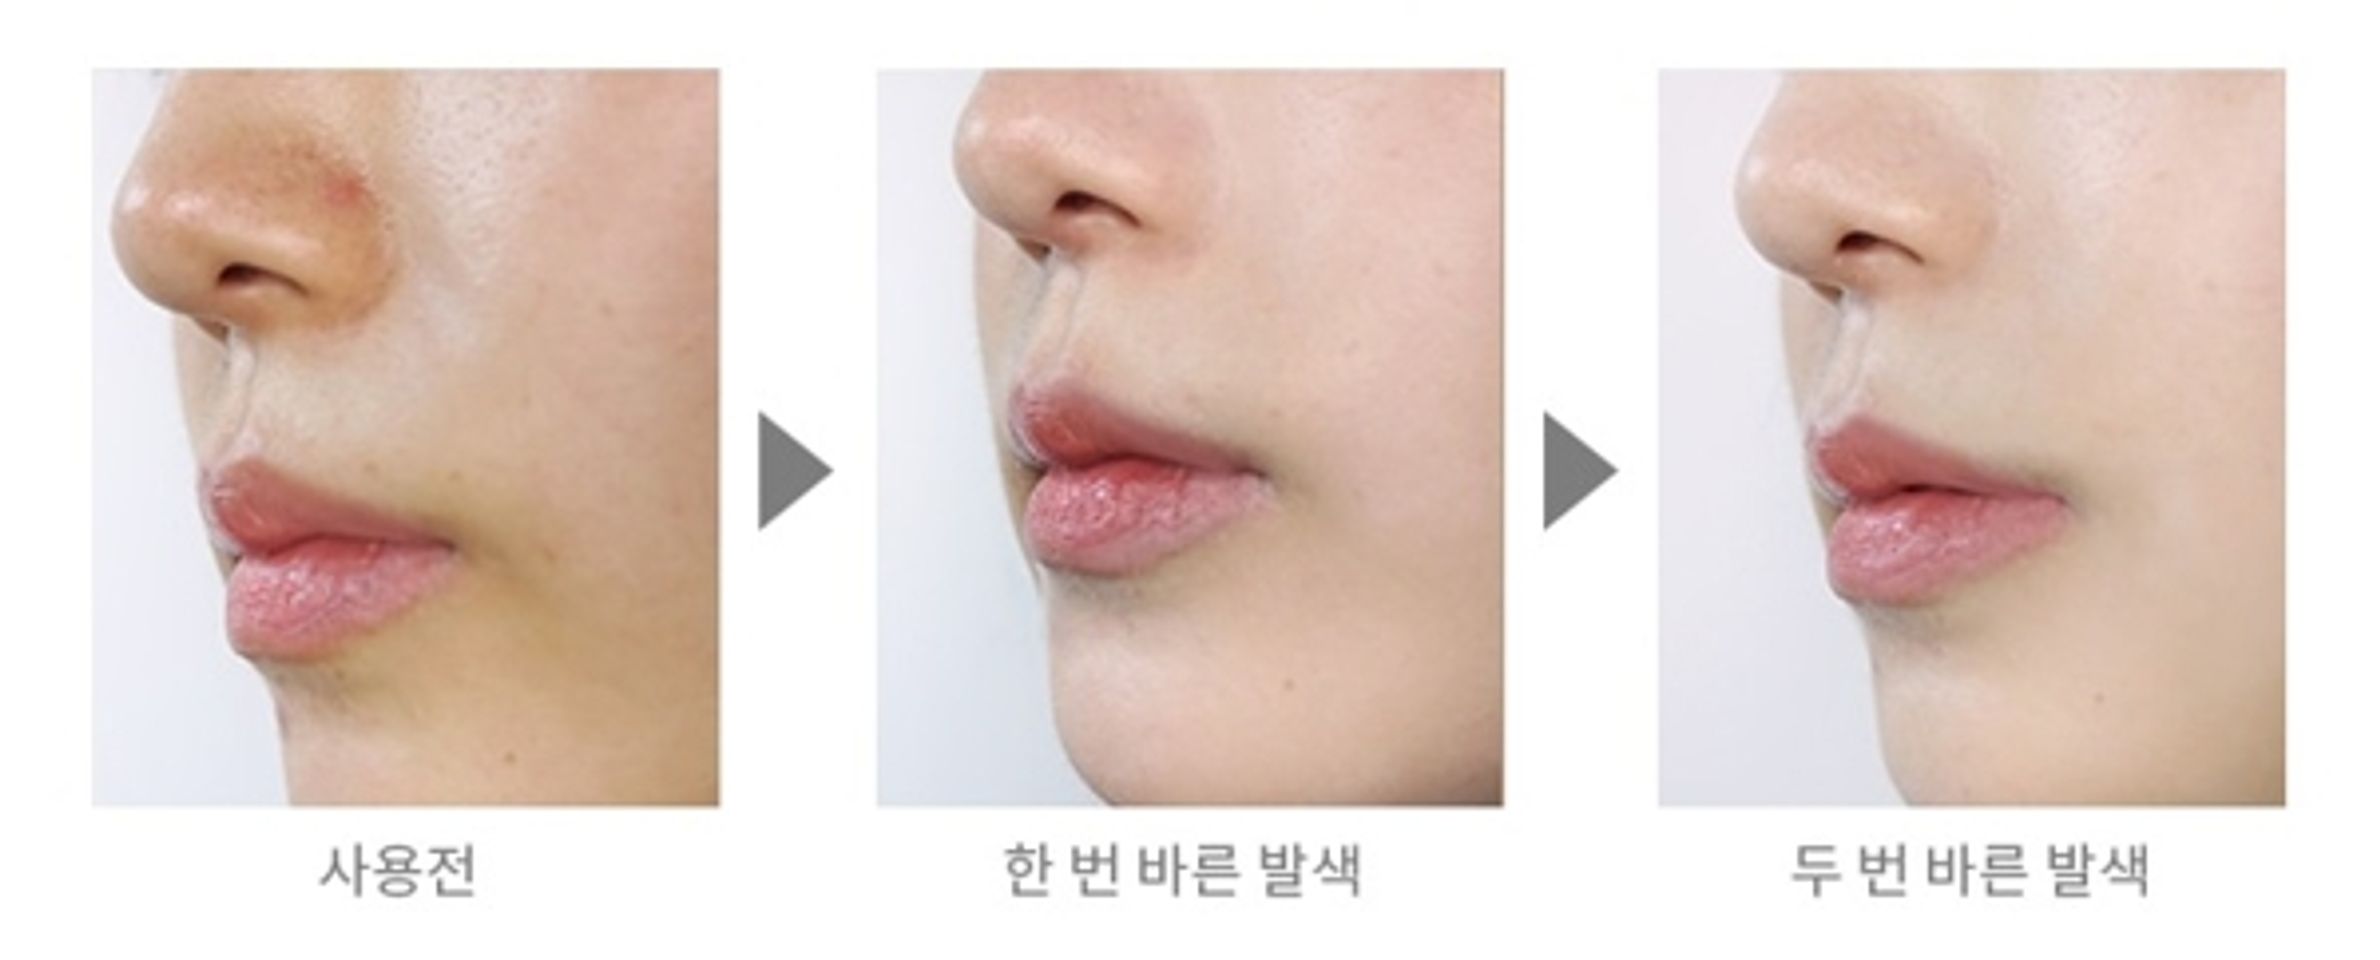 Kem dưỡng trắng da mặt Skin Barista 2 in 1 Hàn Quốc 3